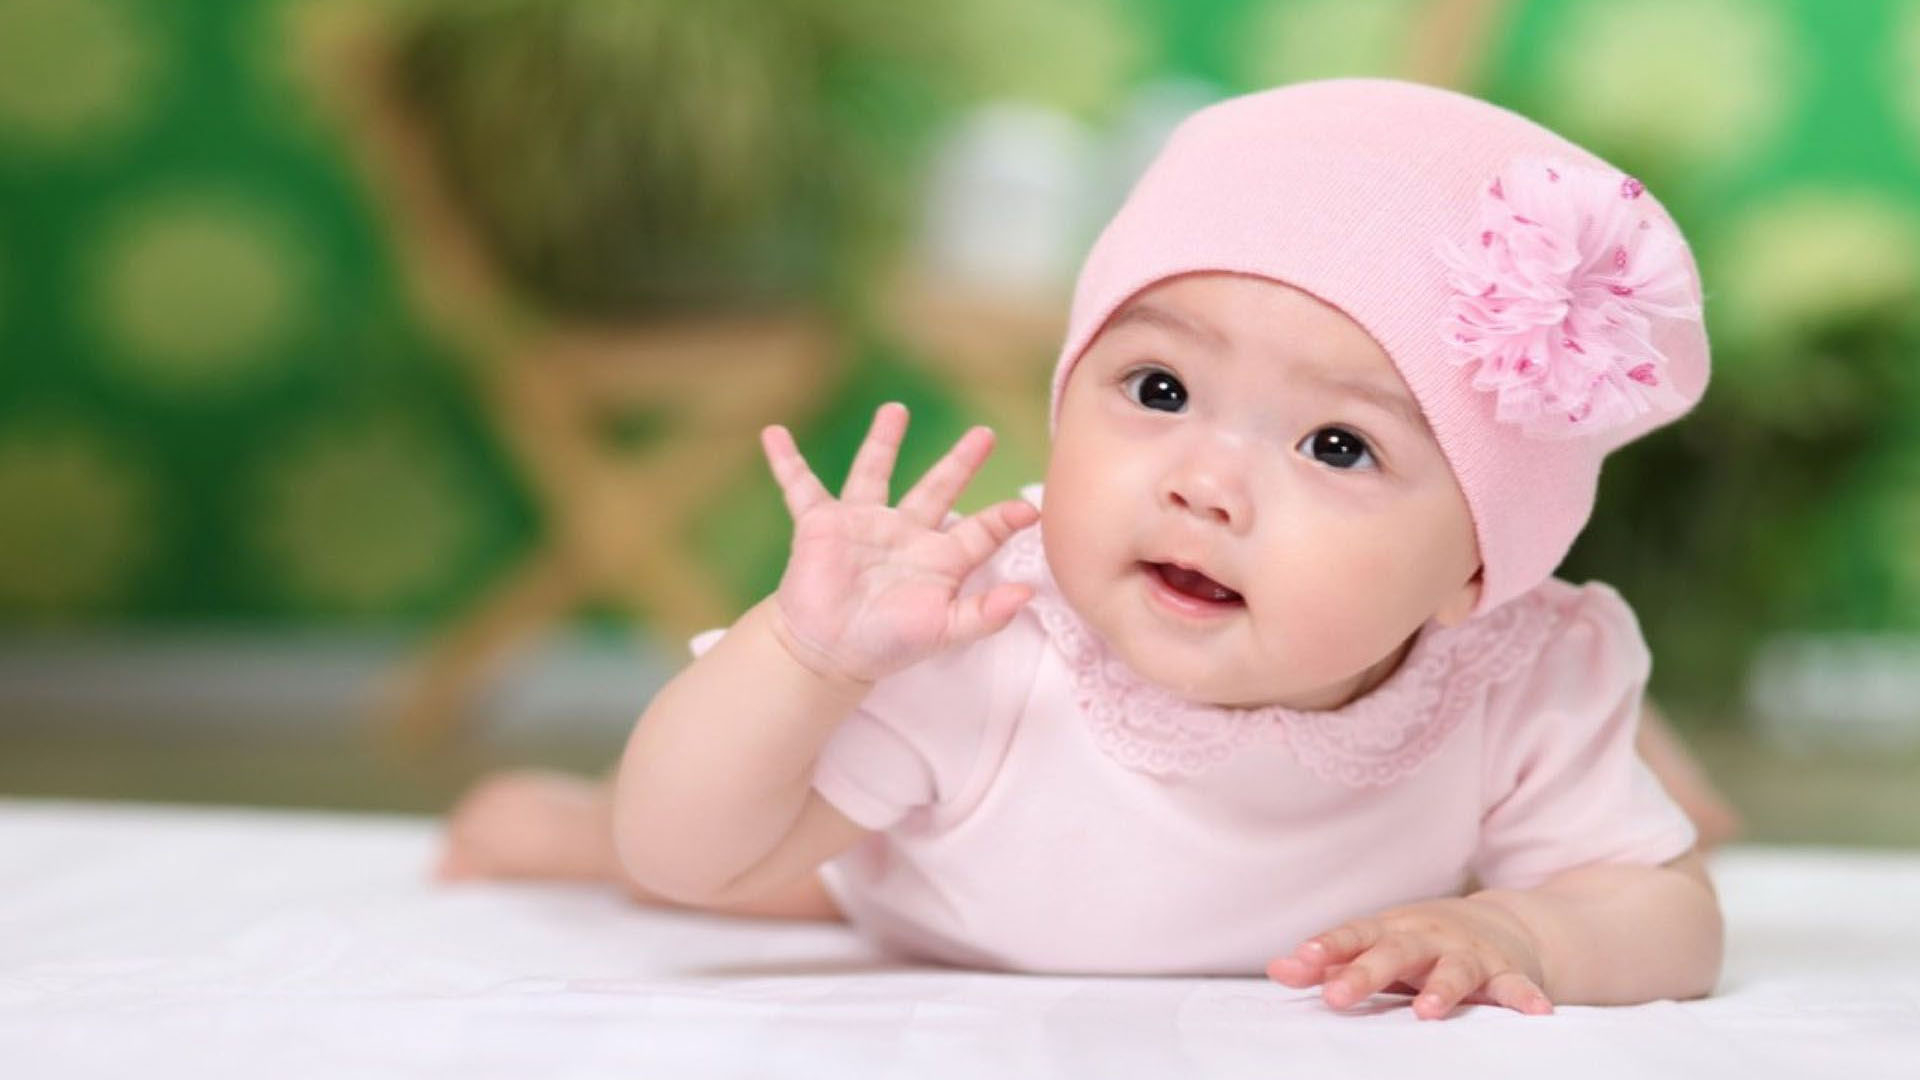 Baby HD Wallpapers | 4K Backgrounds - Wallpapers Den